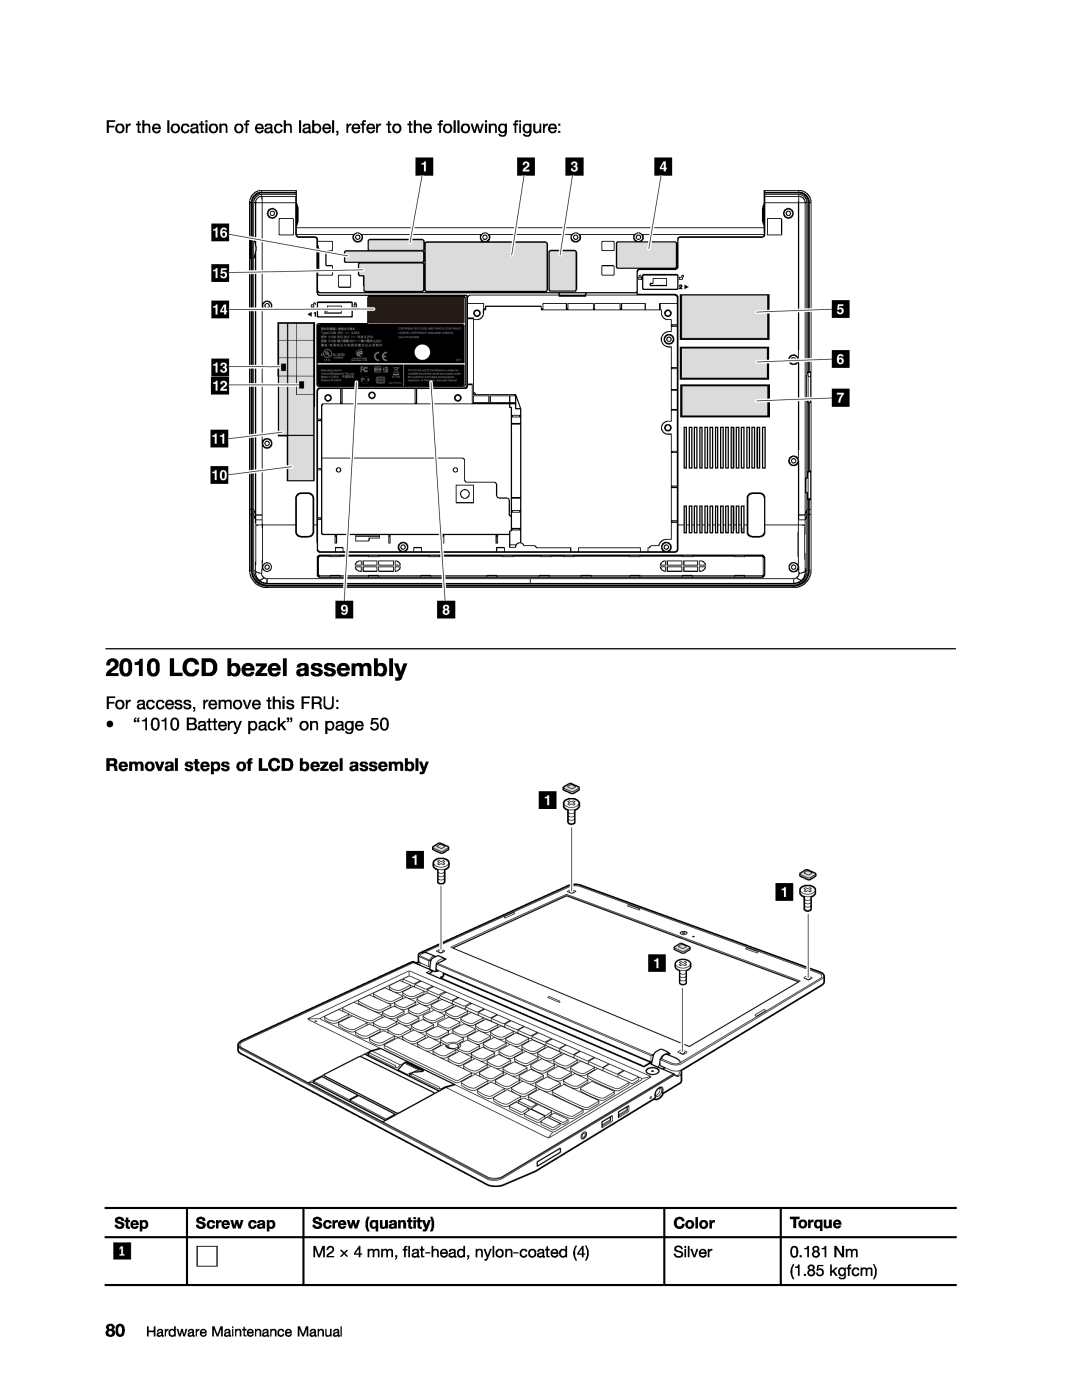 Lenovo EDGE 13, E31, E30 manual Removal steps of LCD bezel assembly 